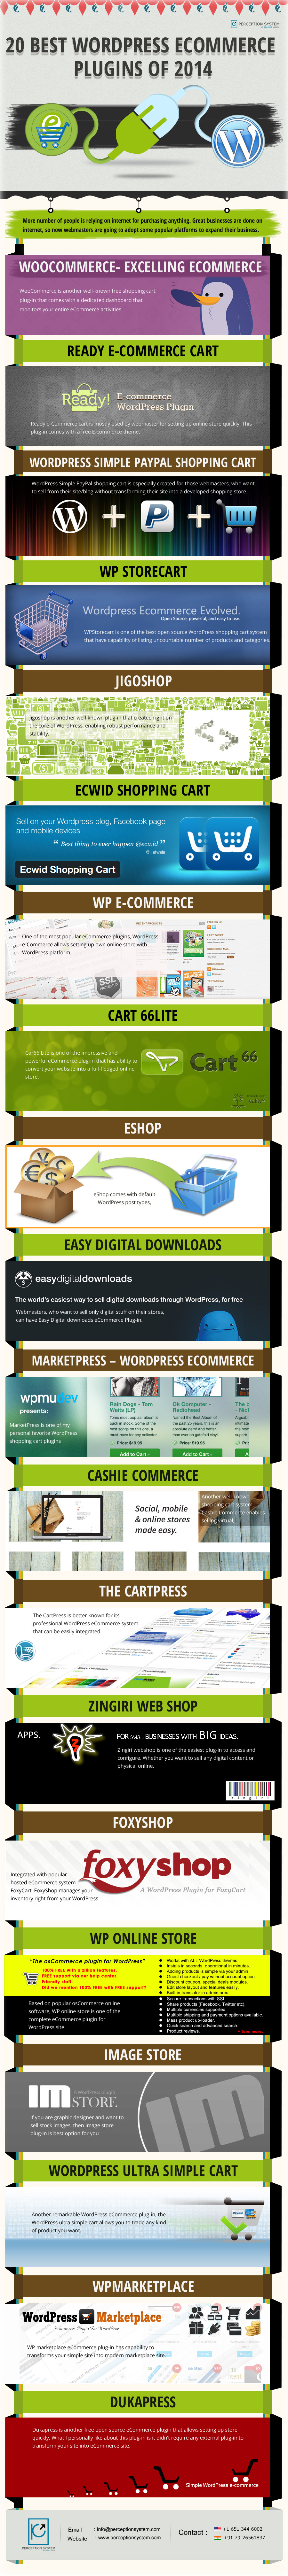 wordpress-ecommerce-plugin-2014